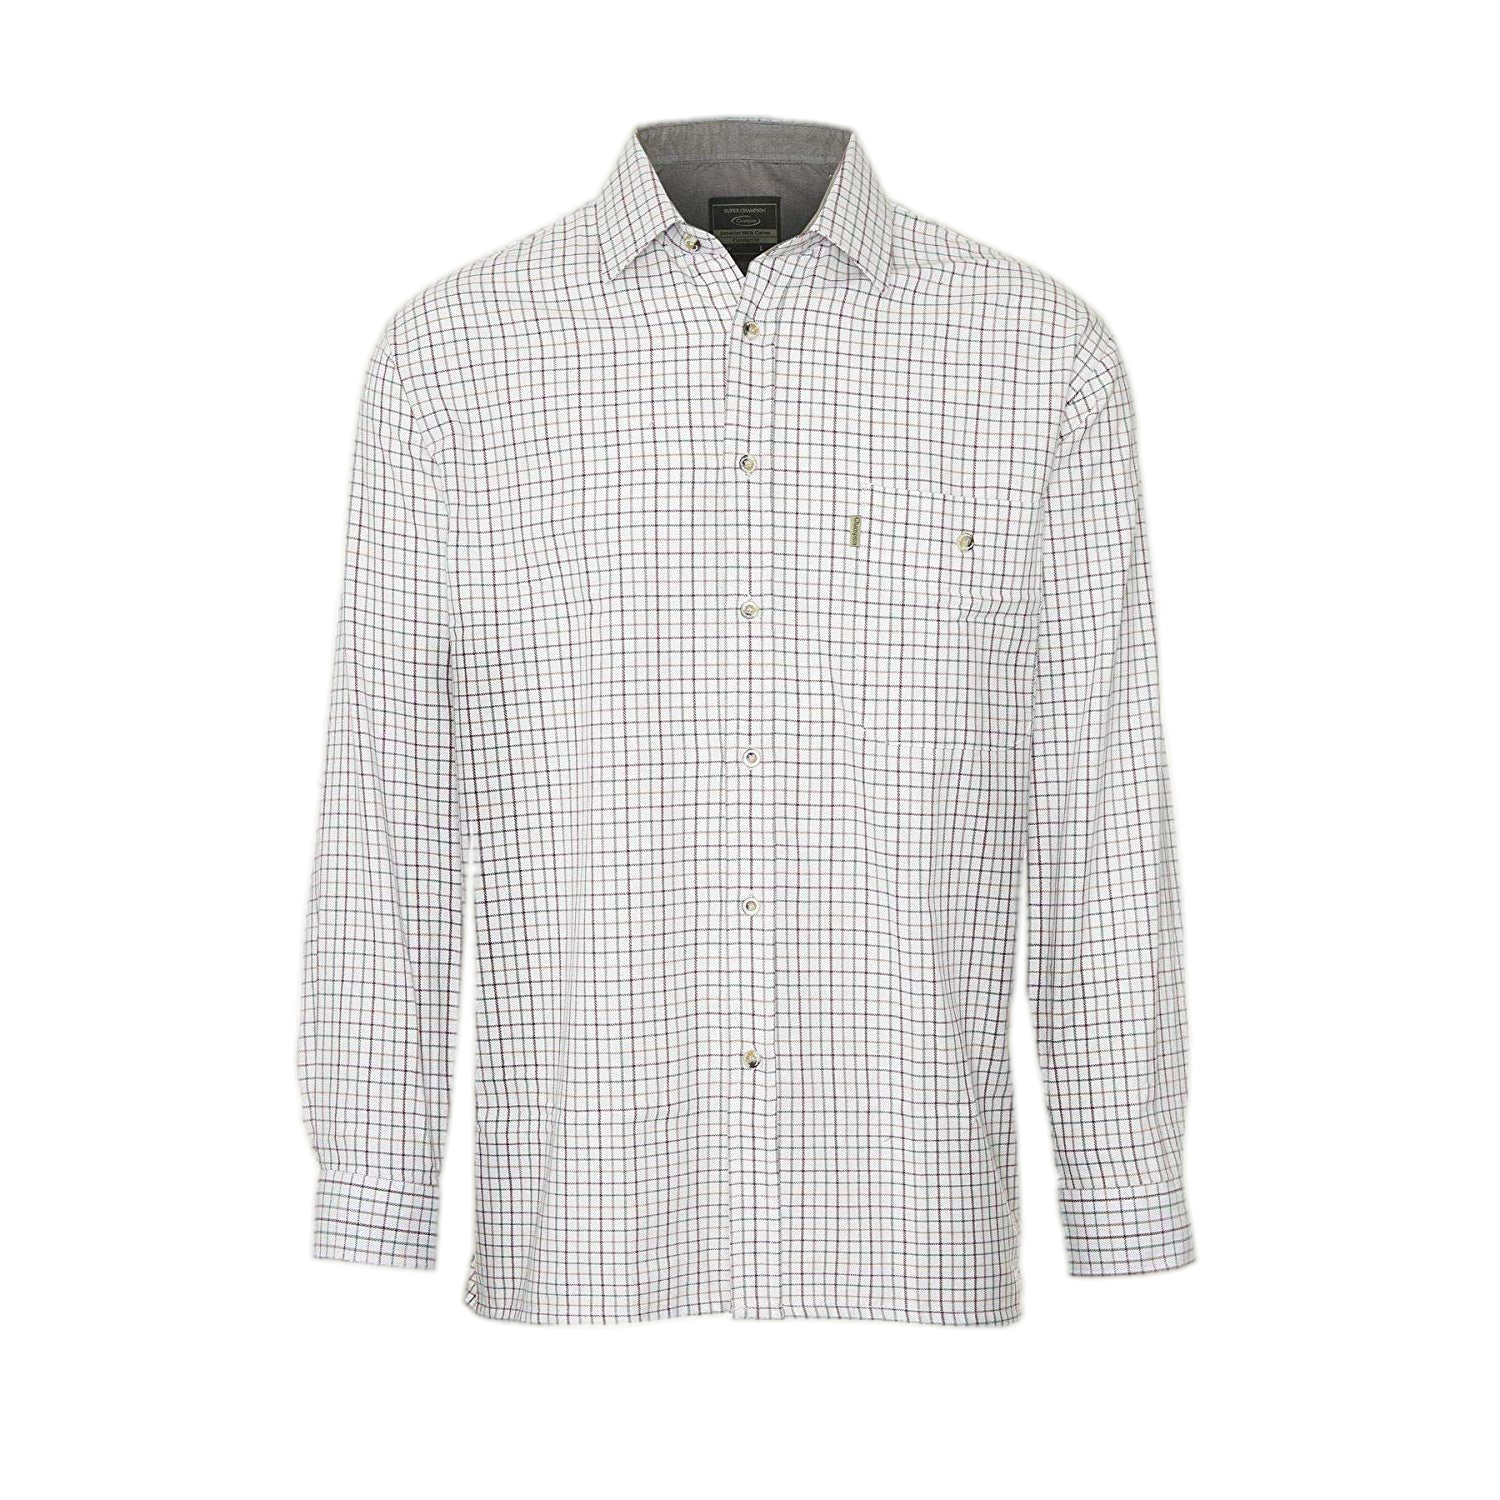 Long Sleeved Cotton Check Shirt